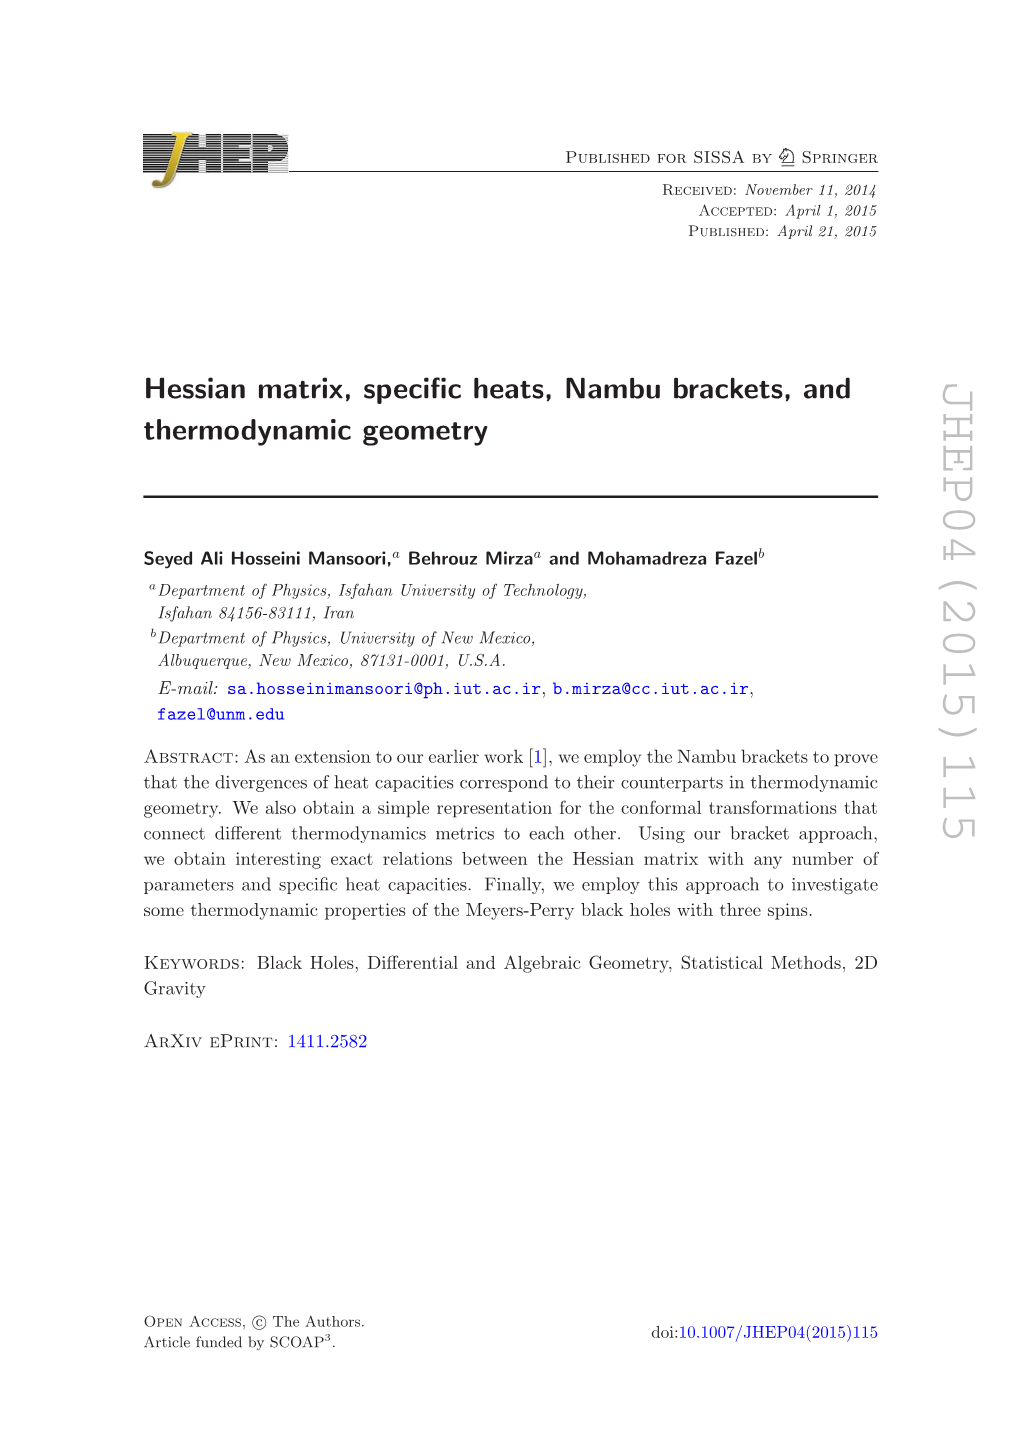 Hessian Matrix, Specific Heats, Nambu Brackets, and Thermodynamic